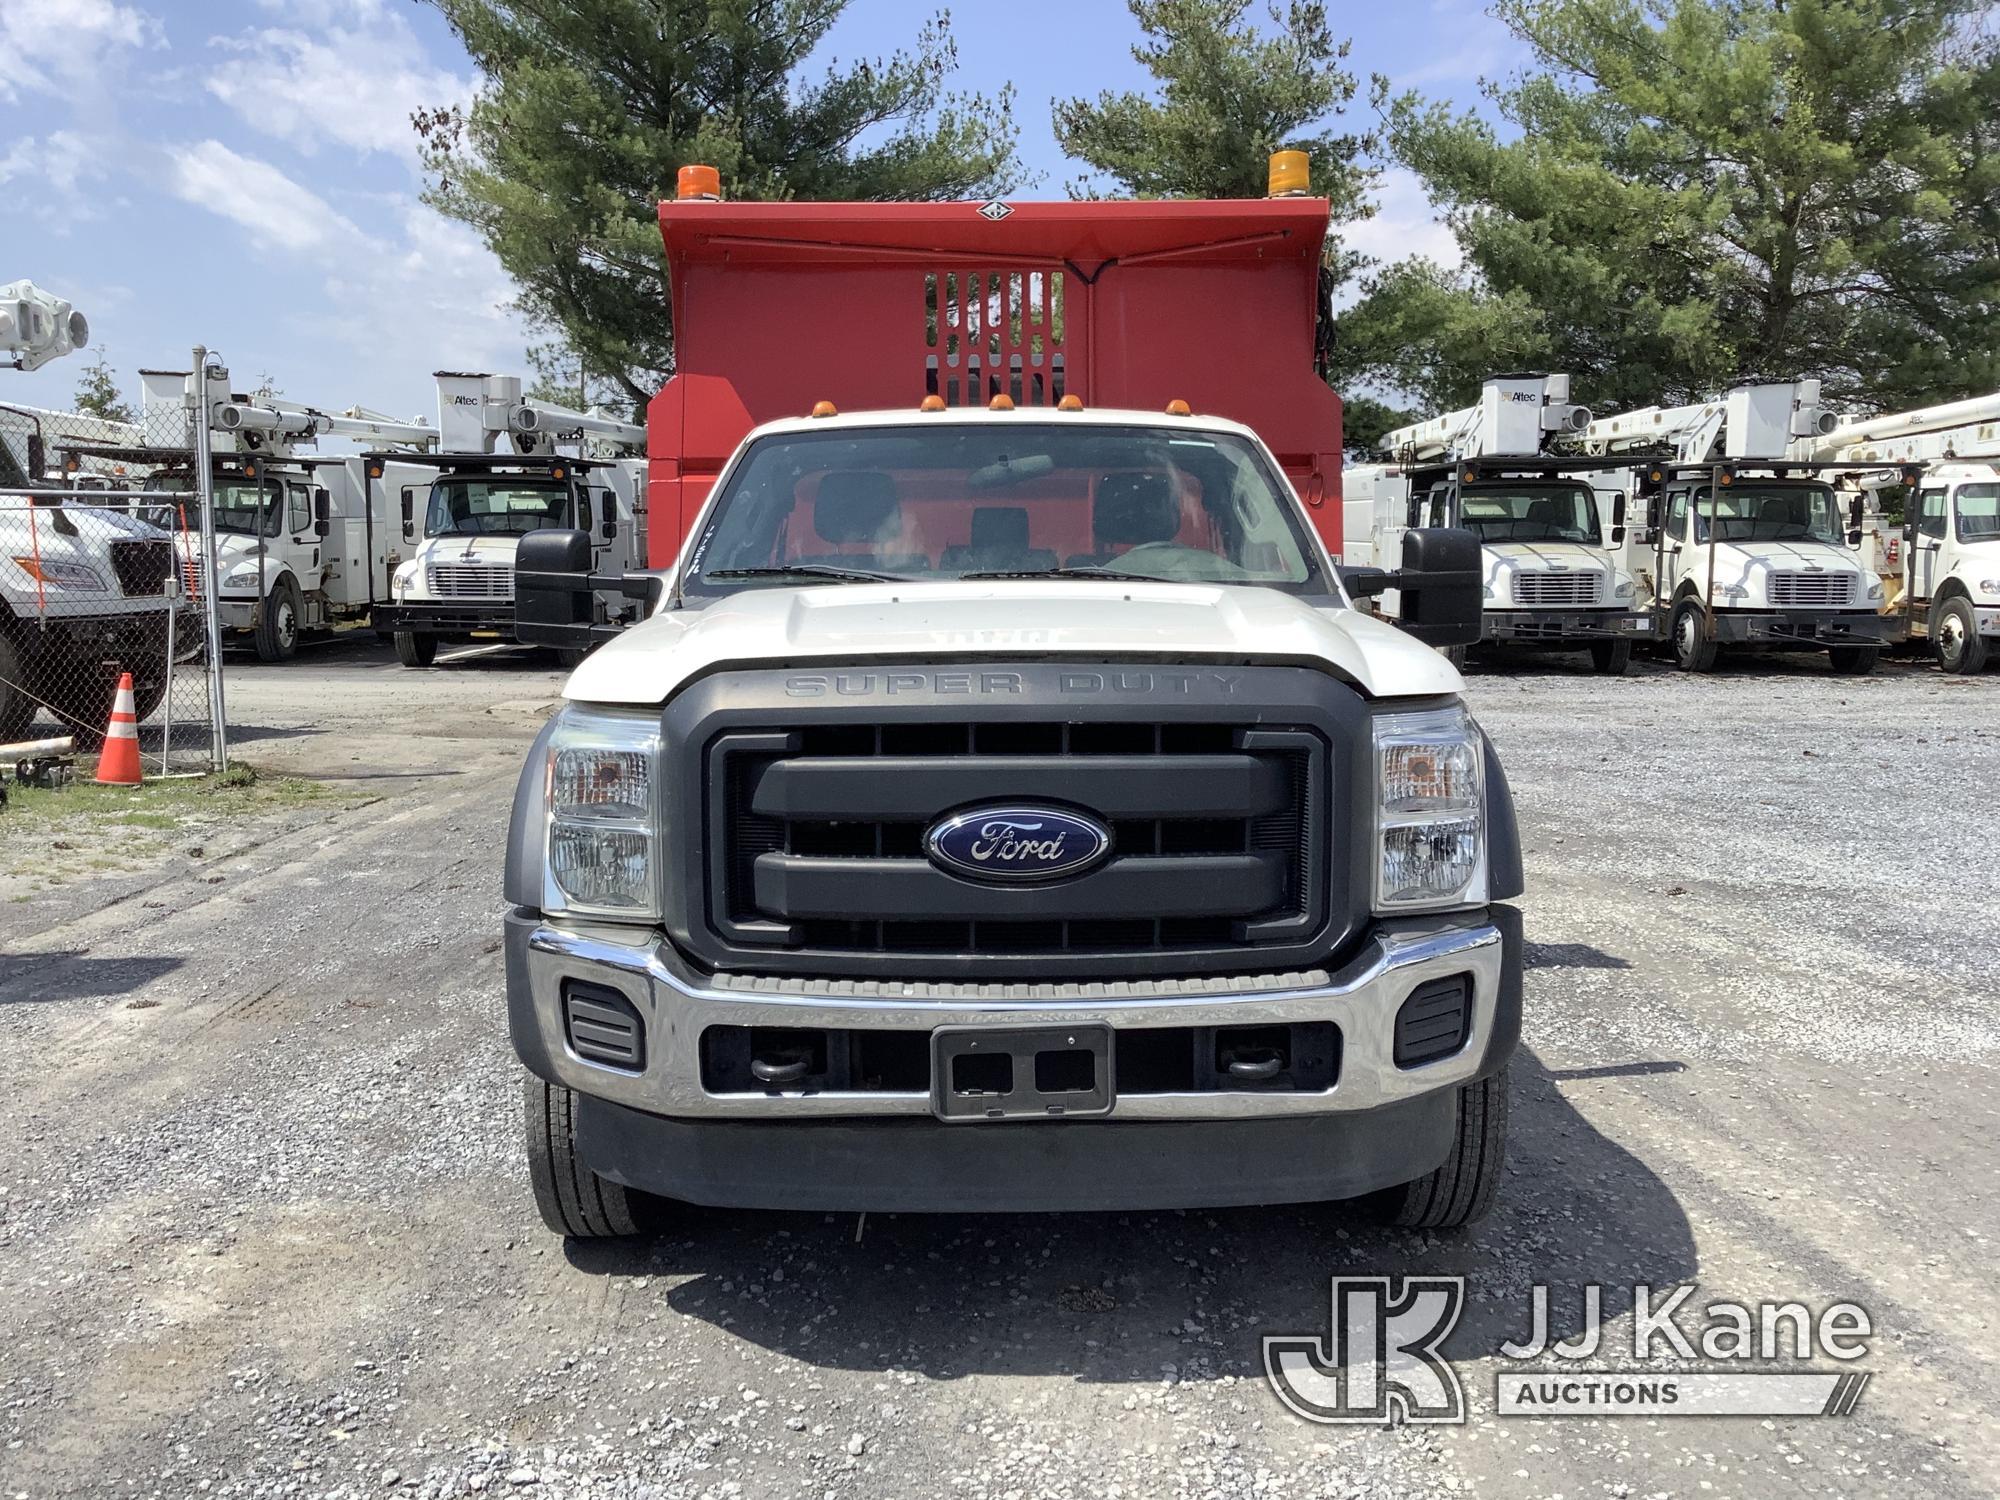 (Frederick, MD) 2015 Ford F550 Dump Truck Runs, Moves & Dumps, Rust Damage, Seller States: Engine Da